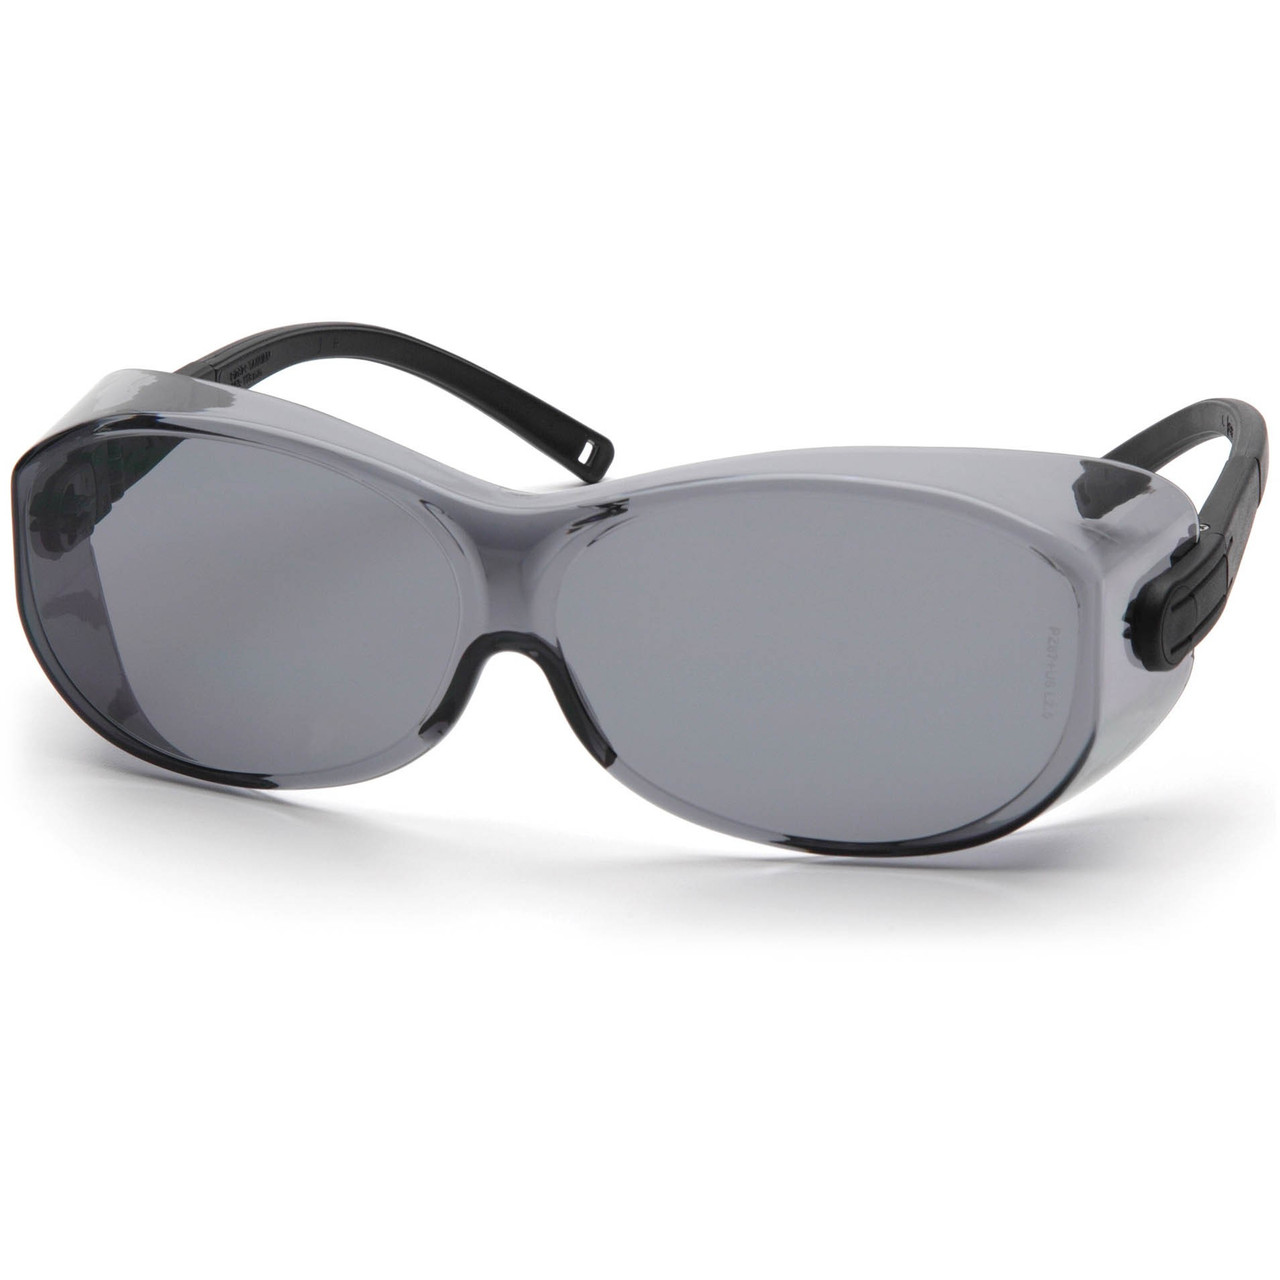 S7520SJ - PYRAMEX® OTS XL - Fits Over Prescription Glasses